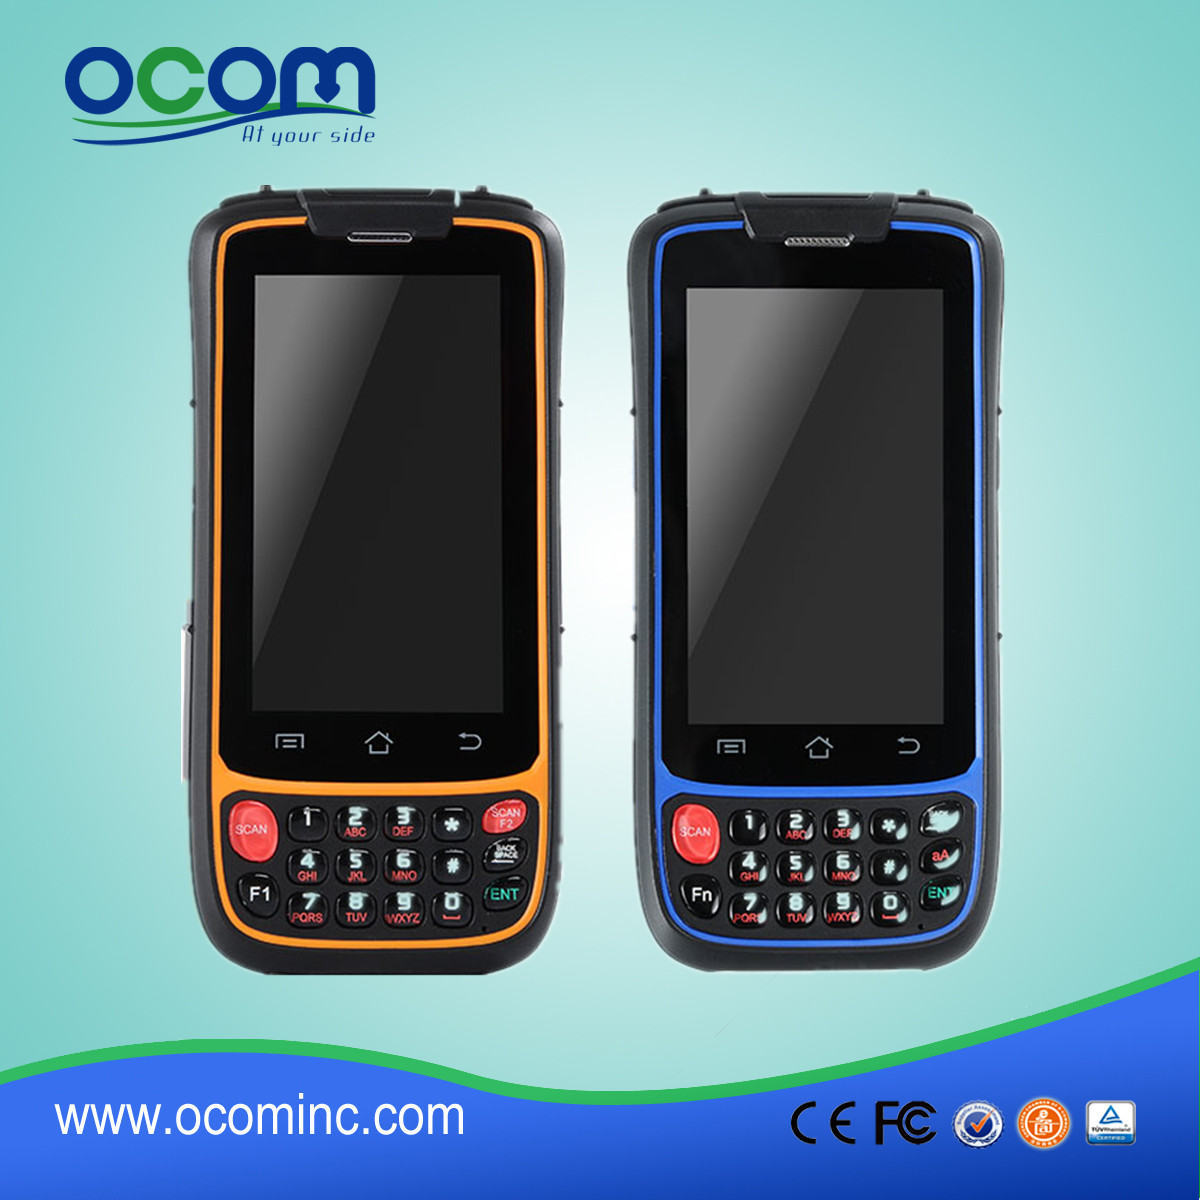 OCBS-D7000 Android handheld data terminal PDA